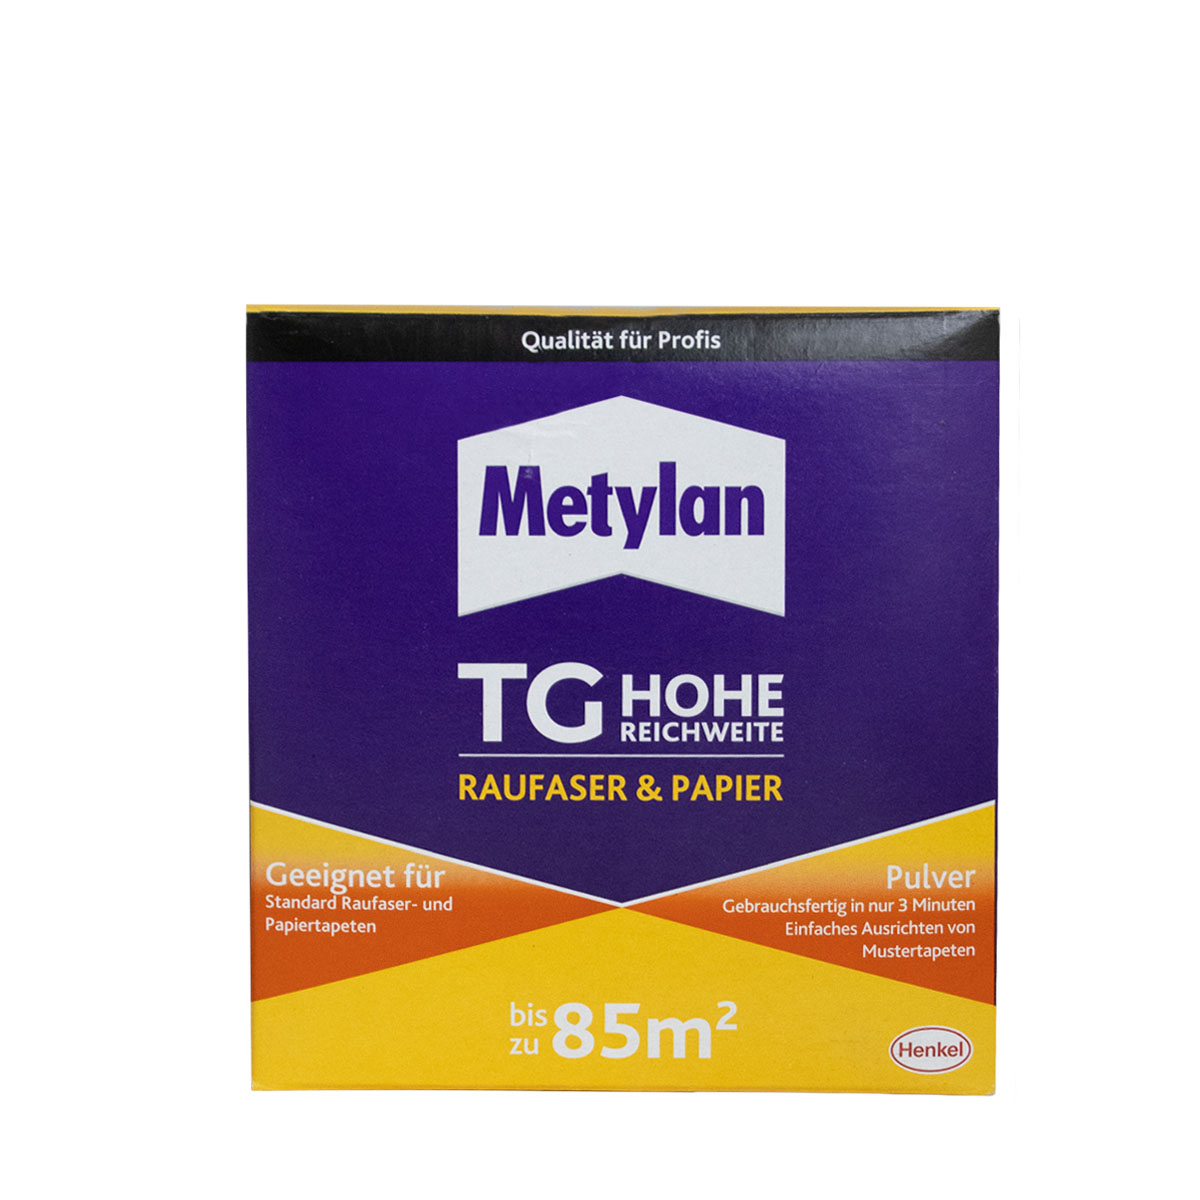 bestellen Metylan | Produkte Farbklecks24 online